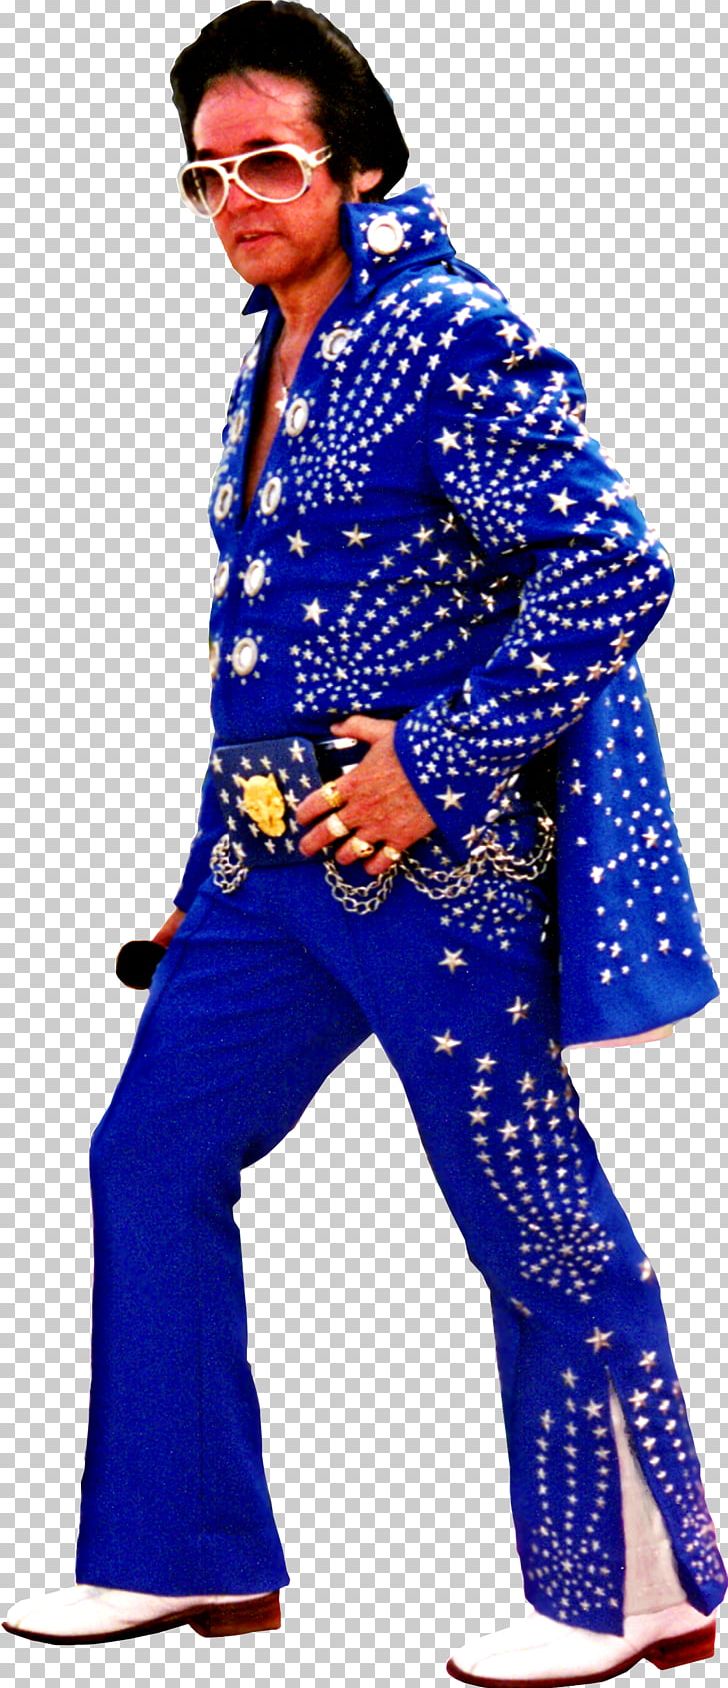 Graceland Elvis Presley Jailhouse Rock Elvis Impersonator Elvis' Christmas Album PNG, Clipart, Blue, Clothing, Cobalt Blue, Costume, Electric Blue Free PNG Download